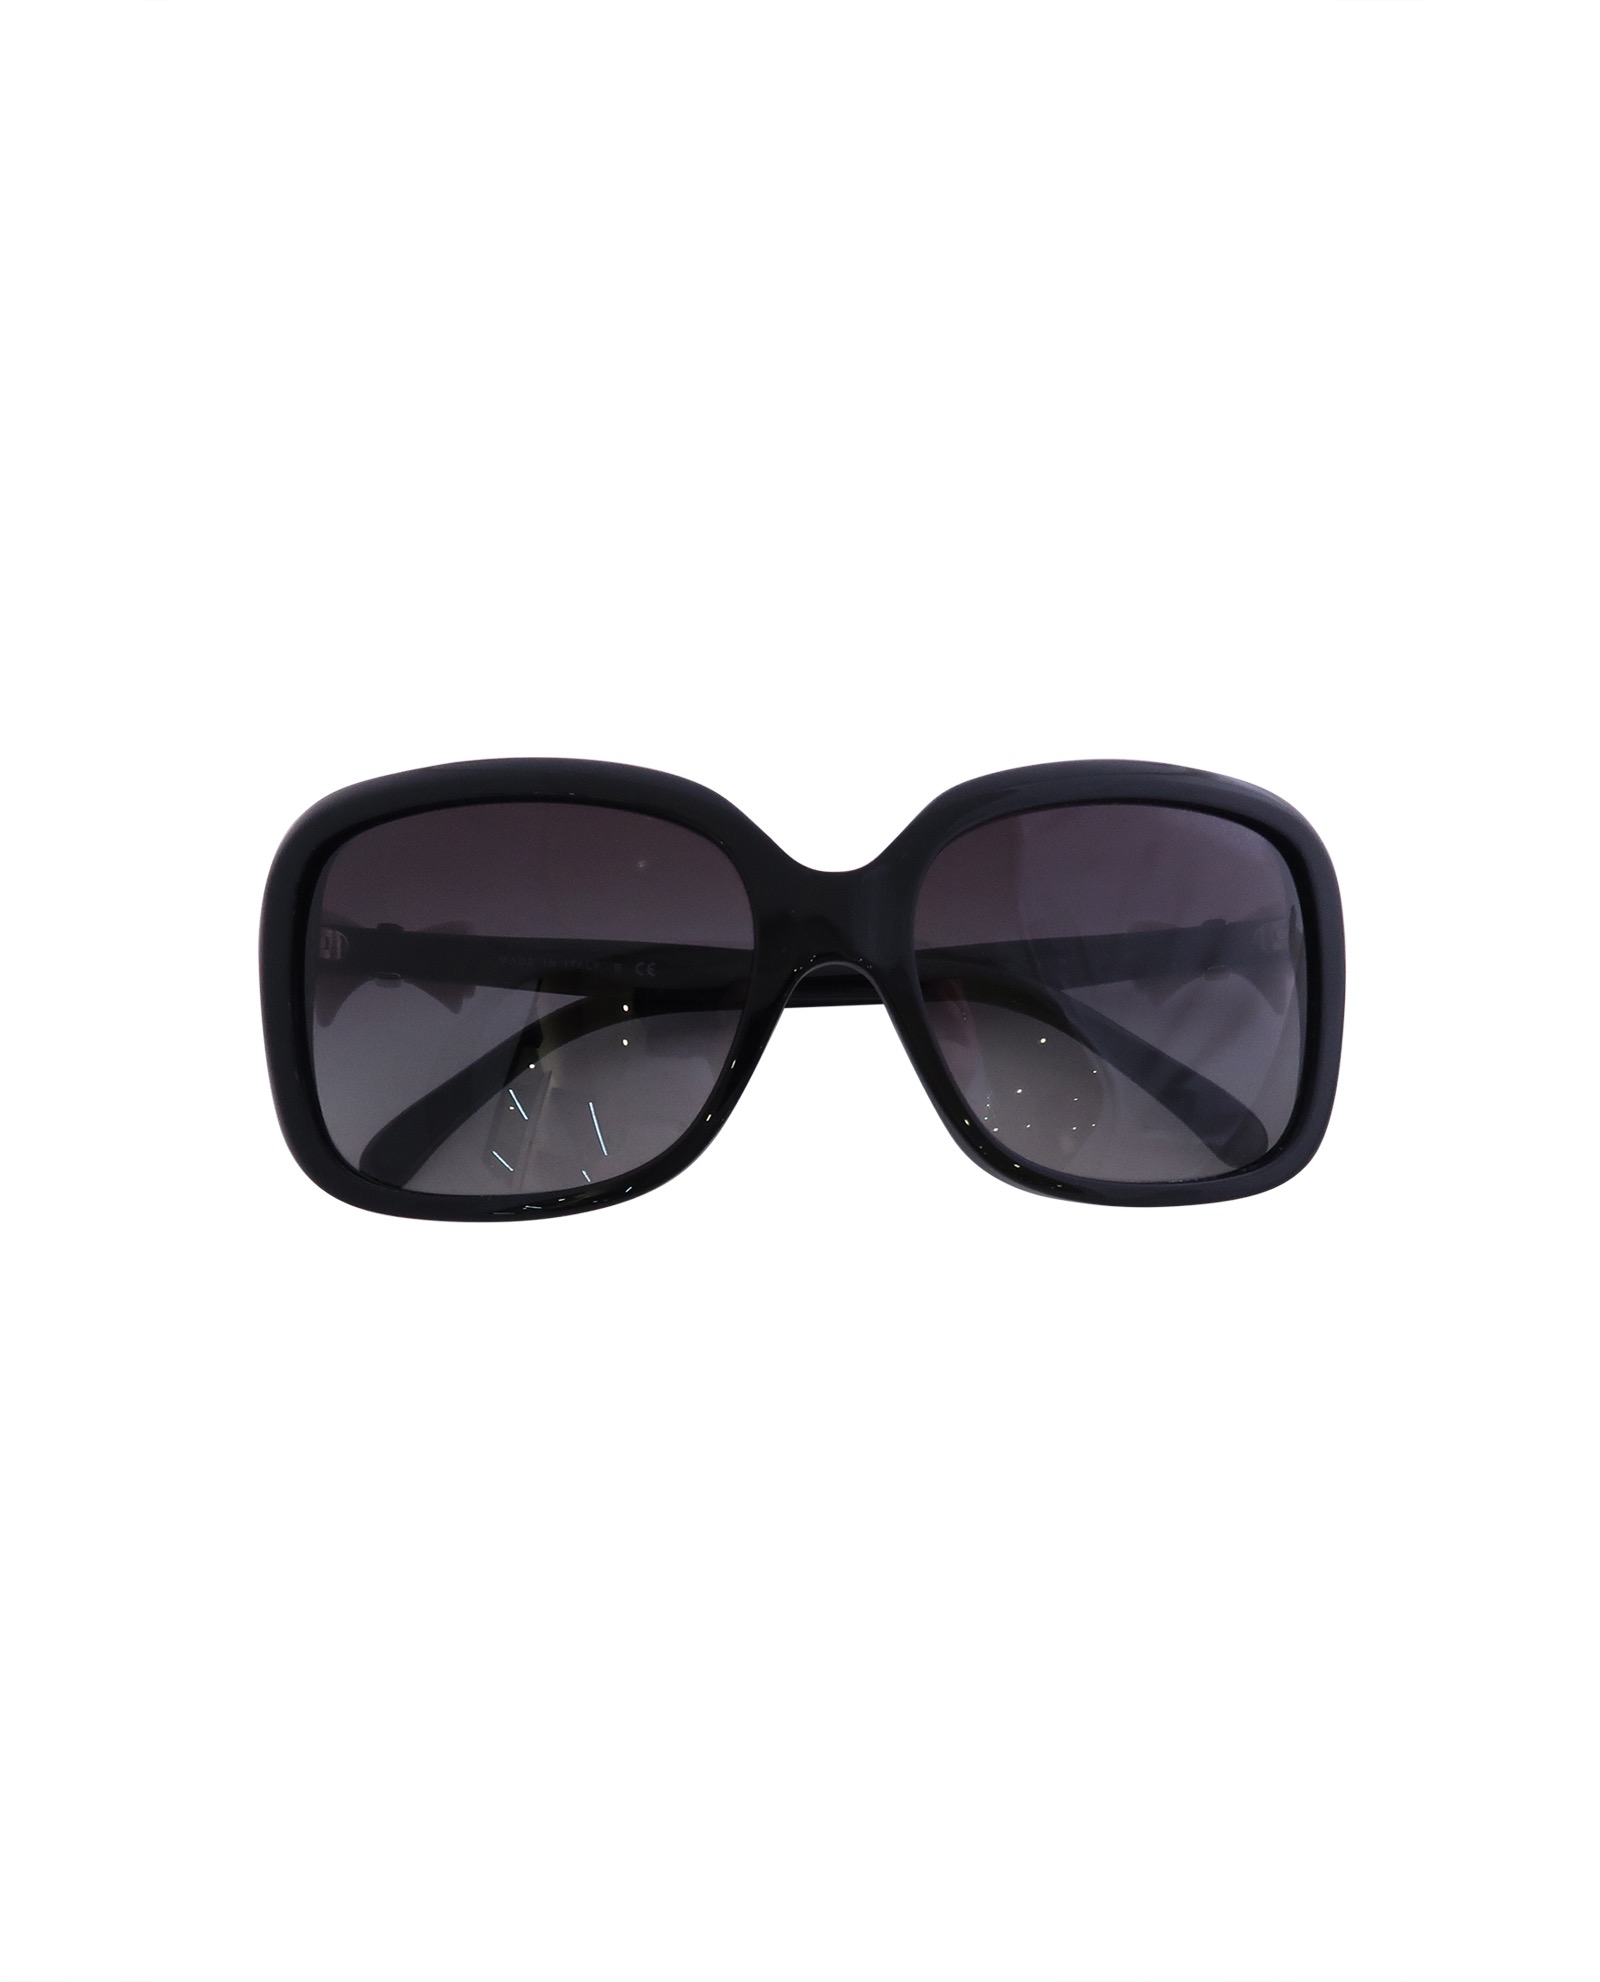 Chanel 5171 Bow Sunglasses